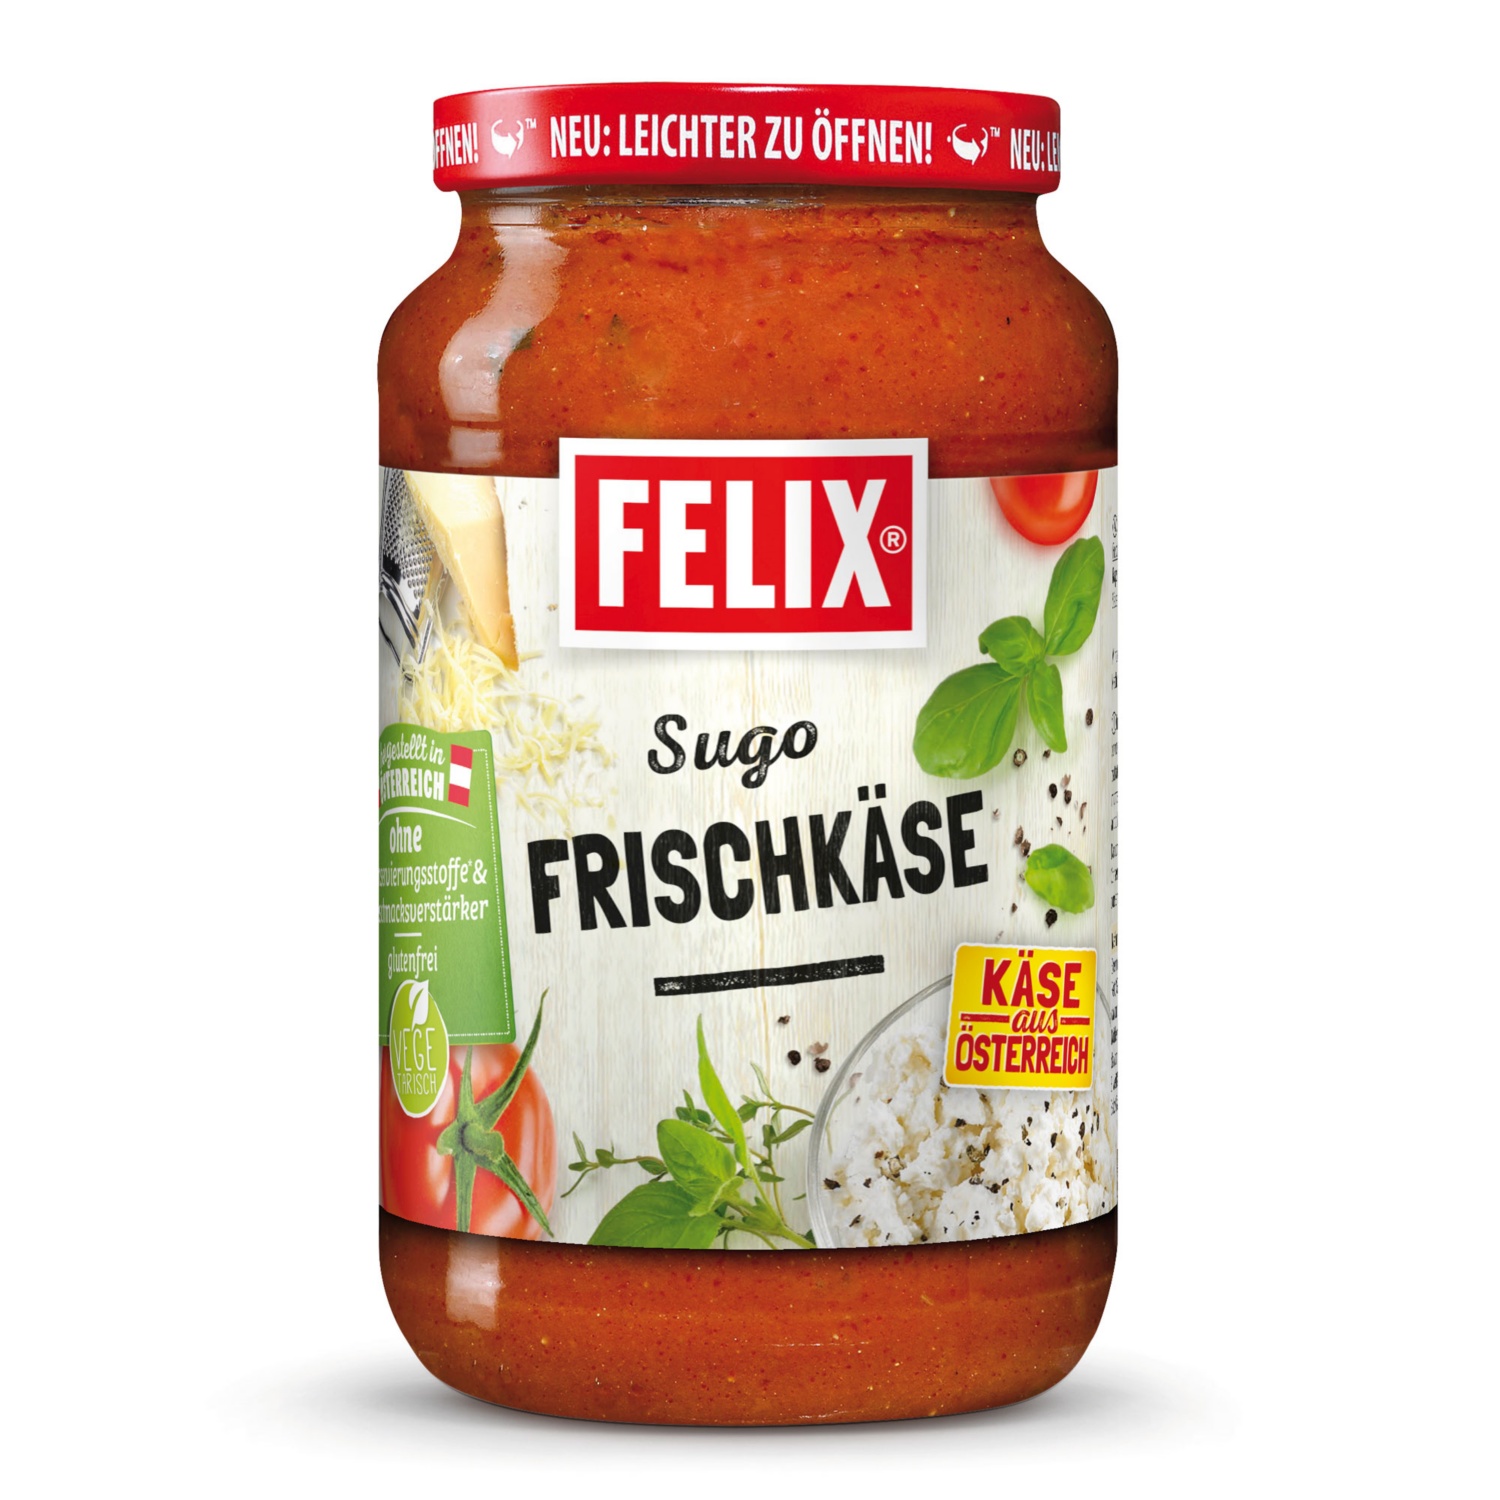 FELIX Regionales Sugo, Vorarlberger Frischkäse